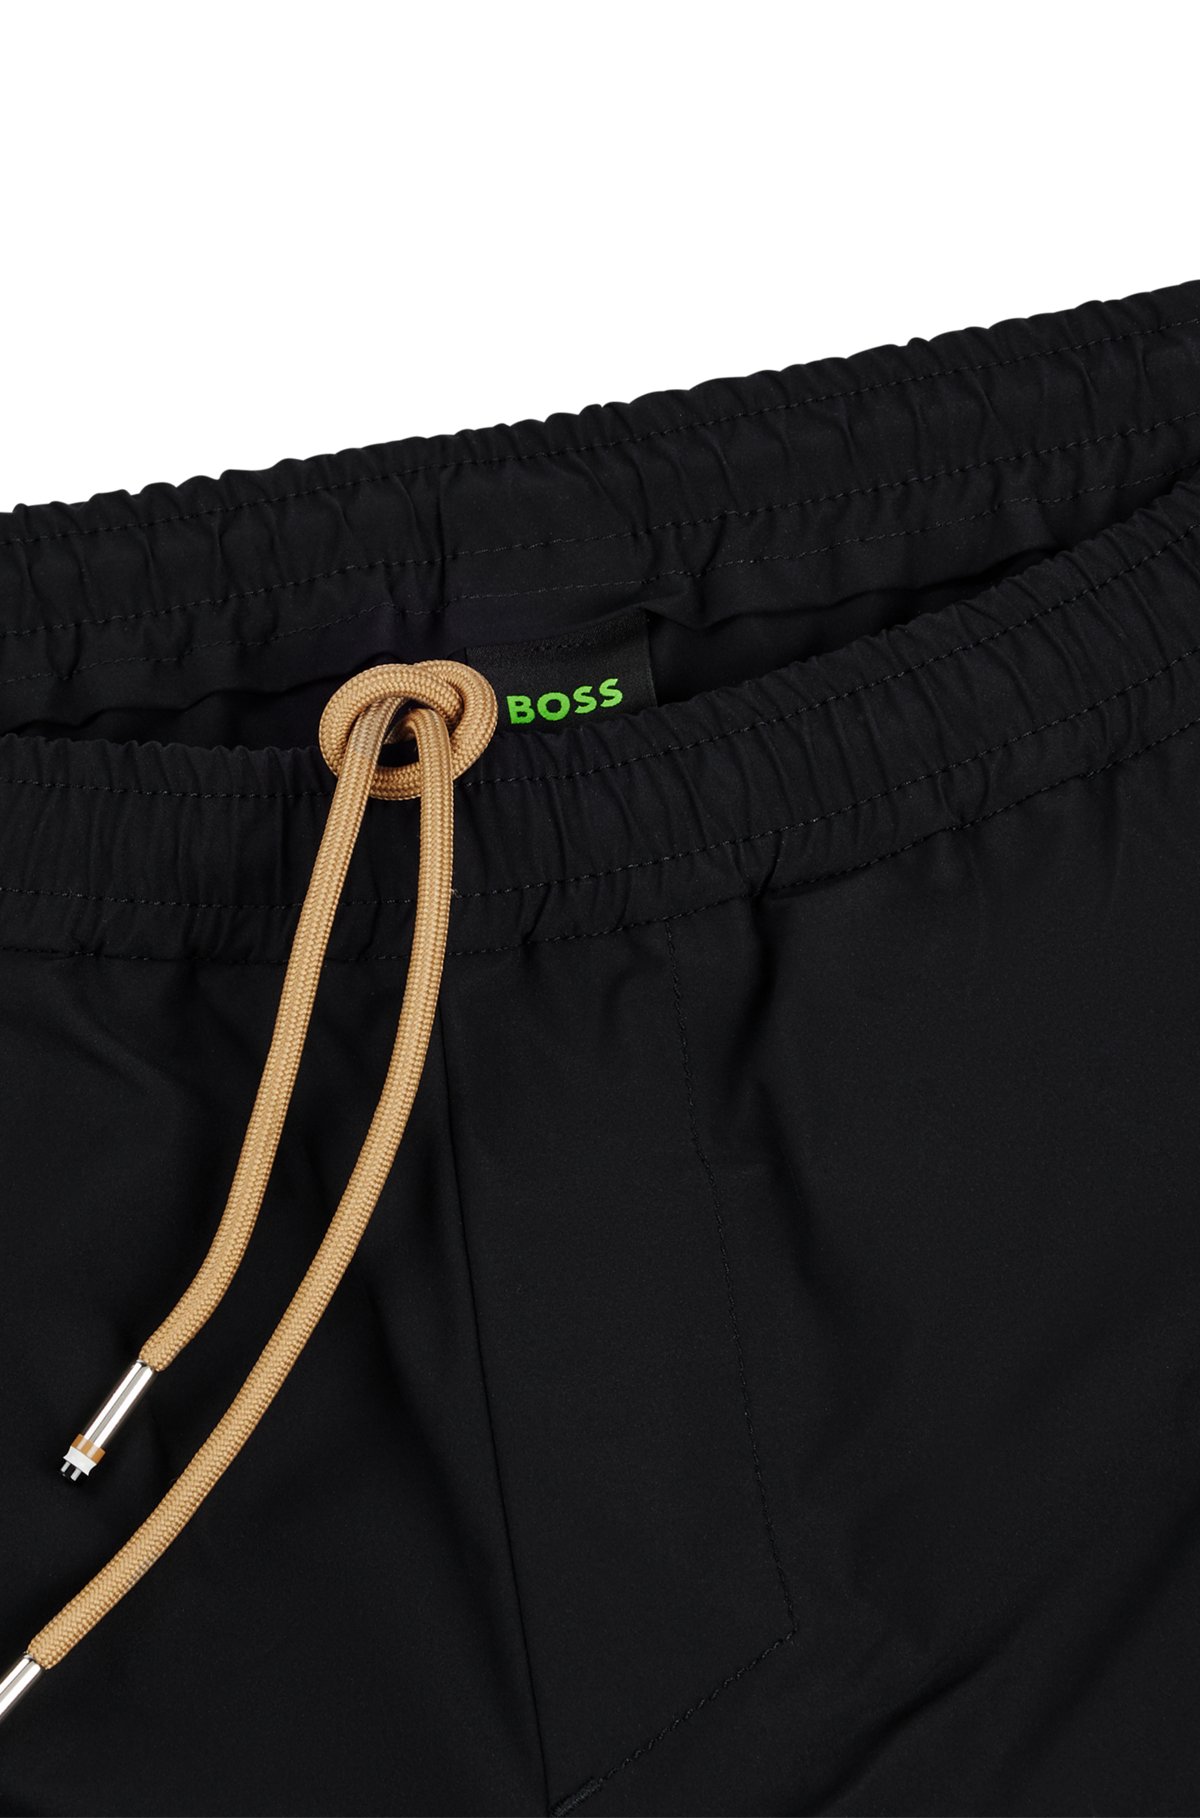 BOSS x Matteo Berrettini stretch-poplin shorts with contrast logo, Black